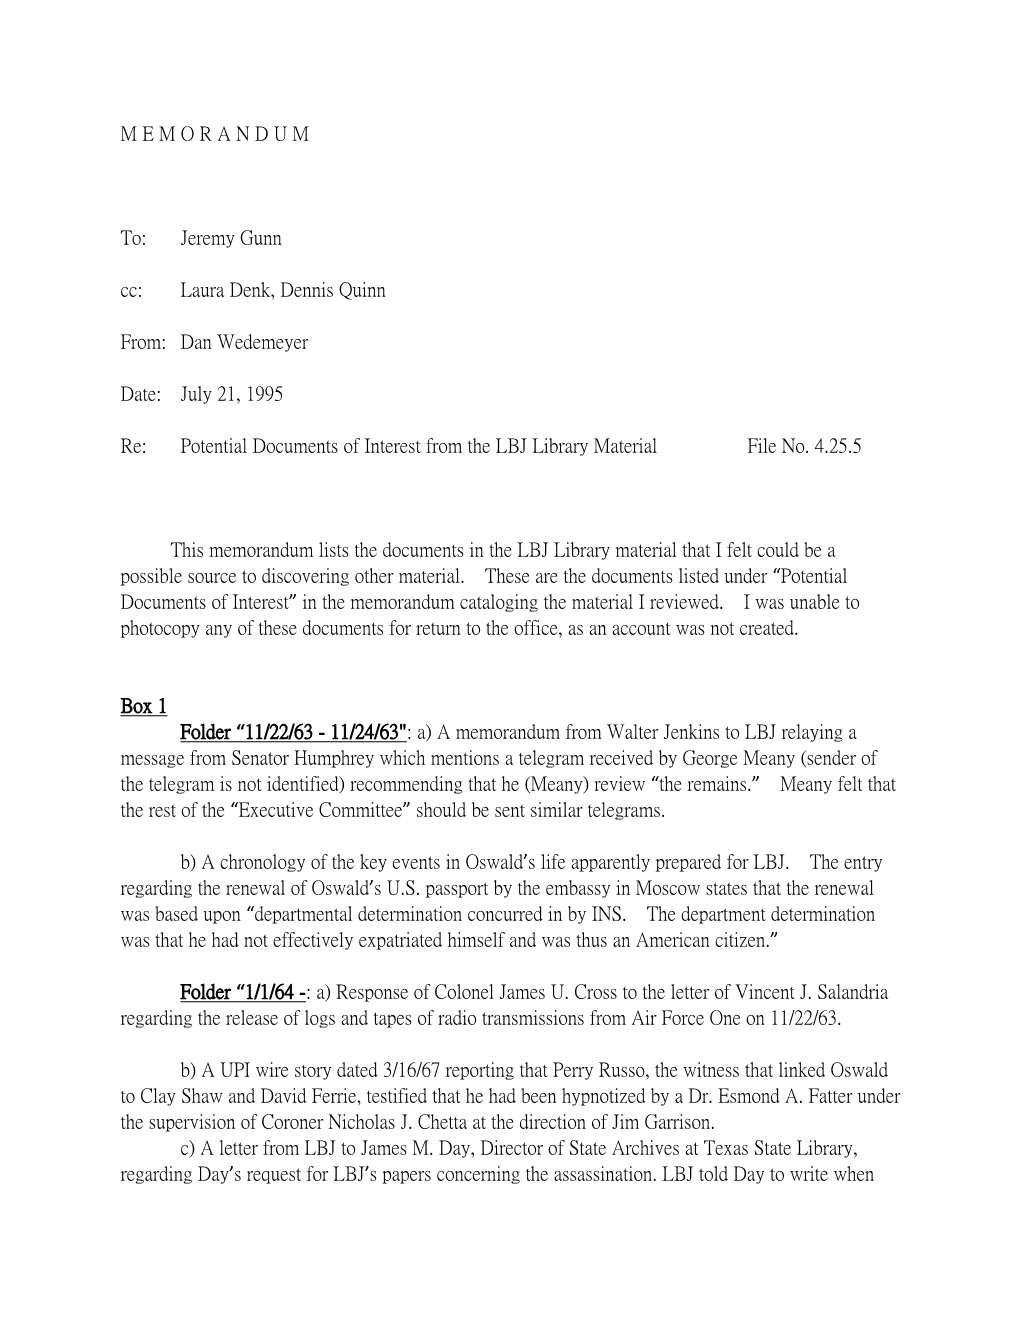 Memorandum to the Secret Service from Tom Johnson Regarding the Information of a “Berzon” on the Assassination